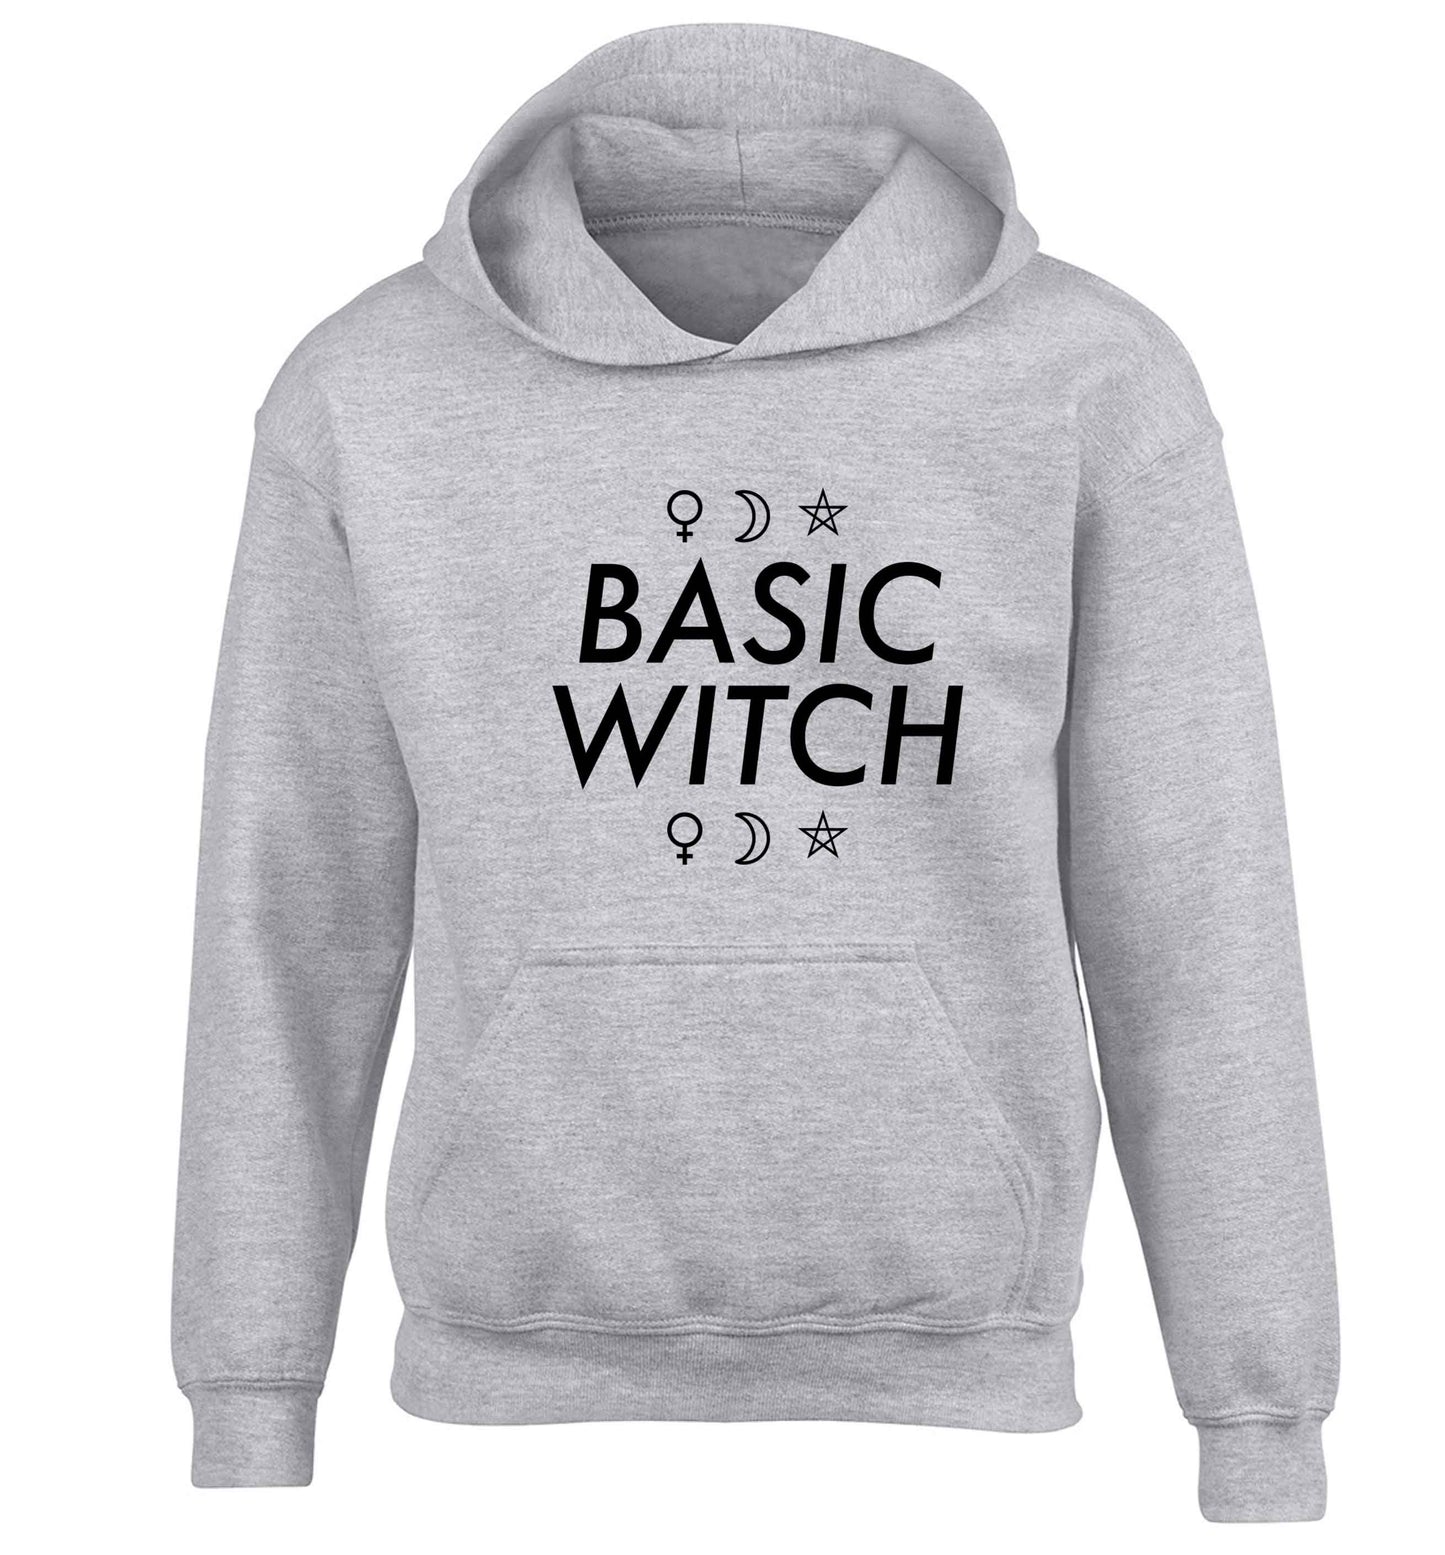 Basic witch 1 children's grey hoodie 12-13 Years